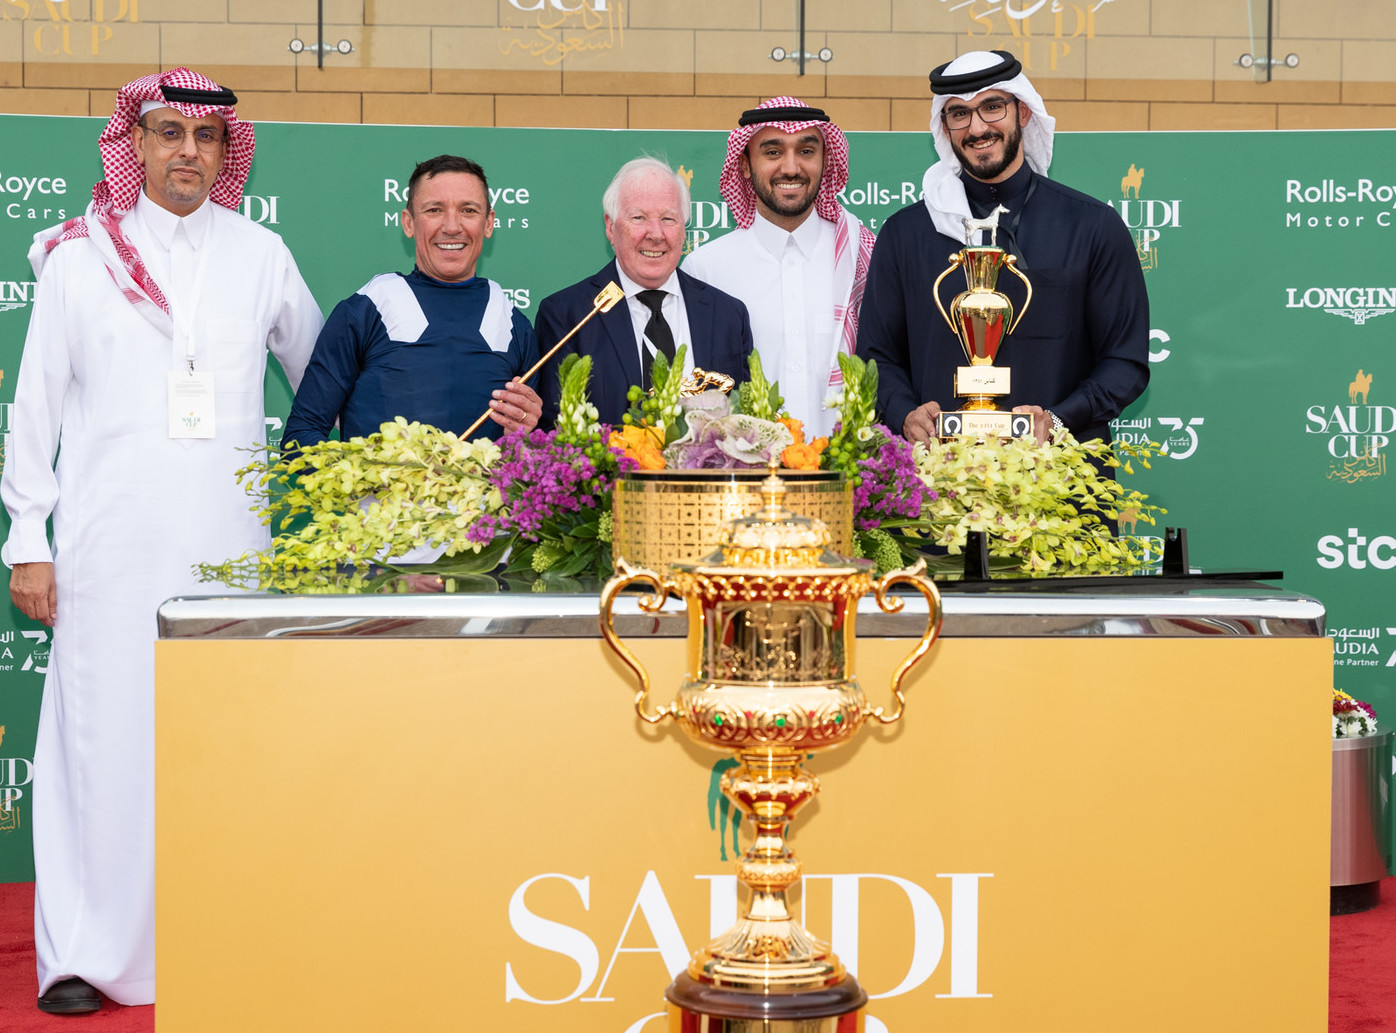 Smith and Dettori at the presentation ceremony at the King Abdulaziz racetrack in Riyadh. Photo: Jockey Club of Saudi Arabia/Neville Hopwood